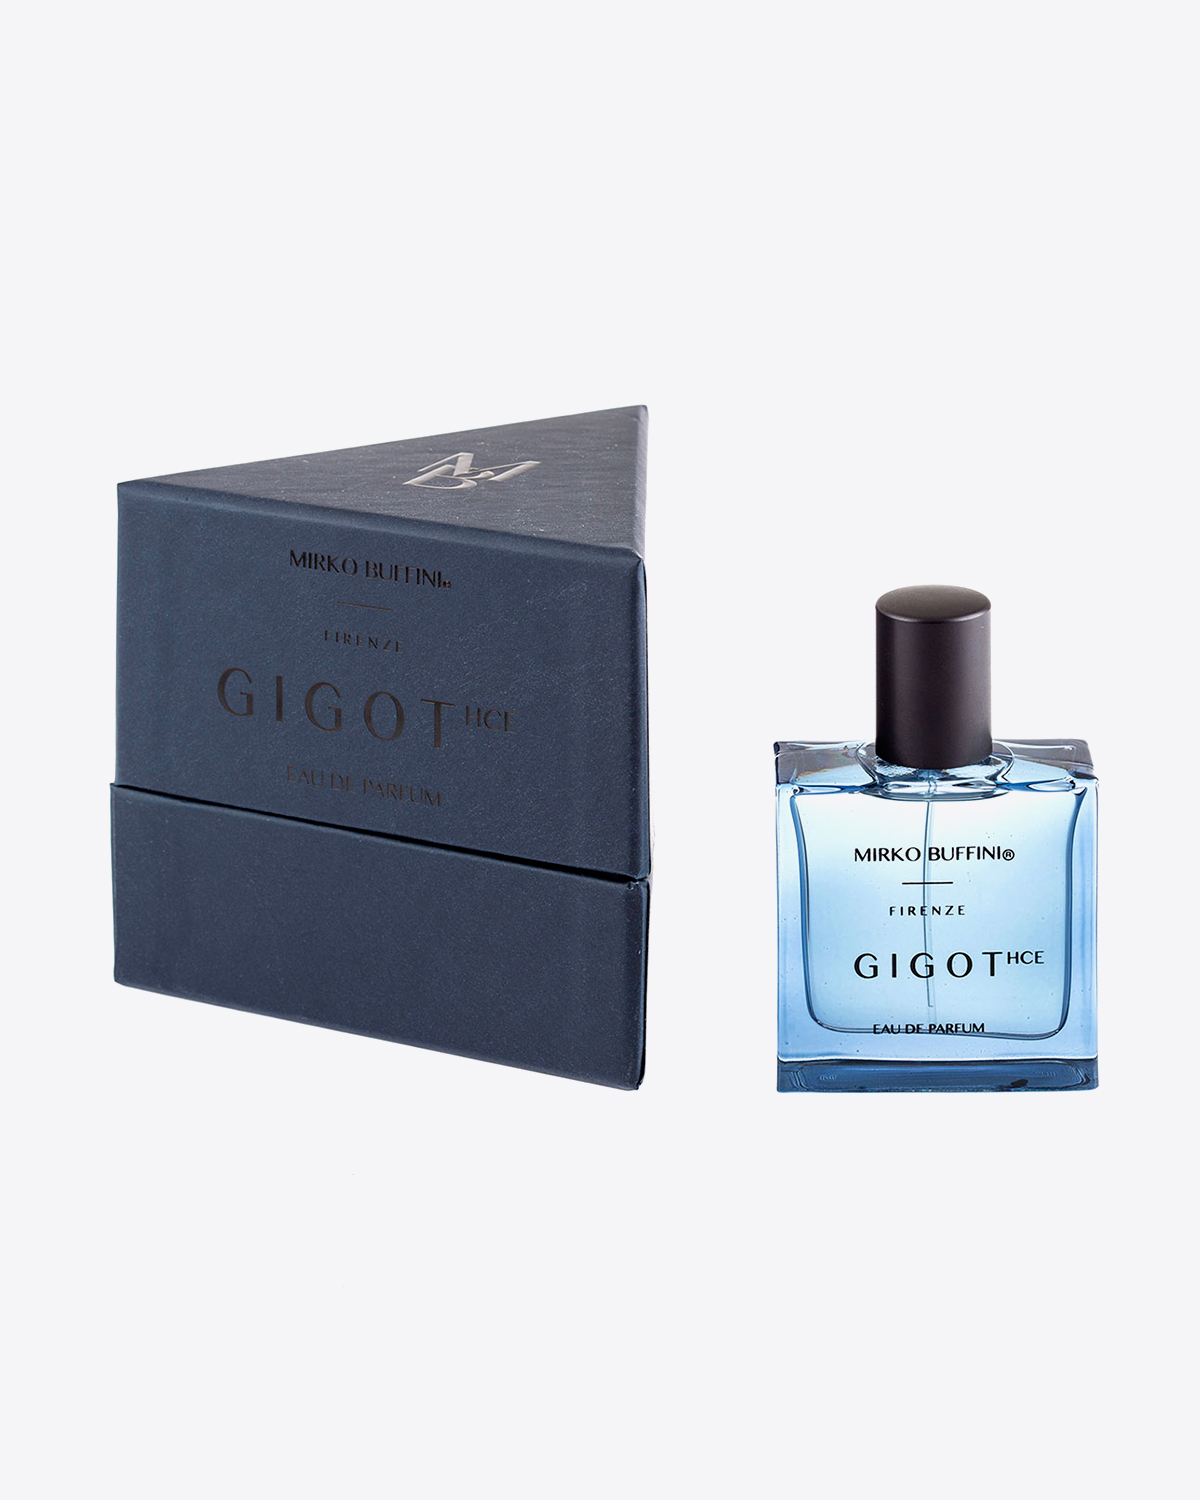 Parfum Gigot Mirko Buffini. Flacon de 30 ml vendu dans sa boite triangulaire. Collection HCE.